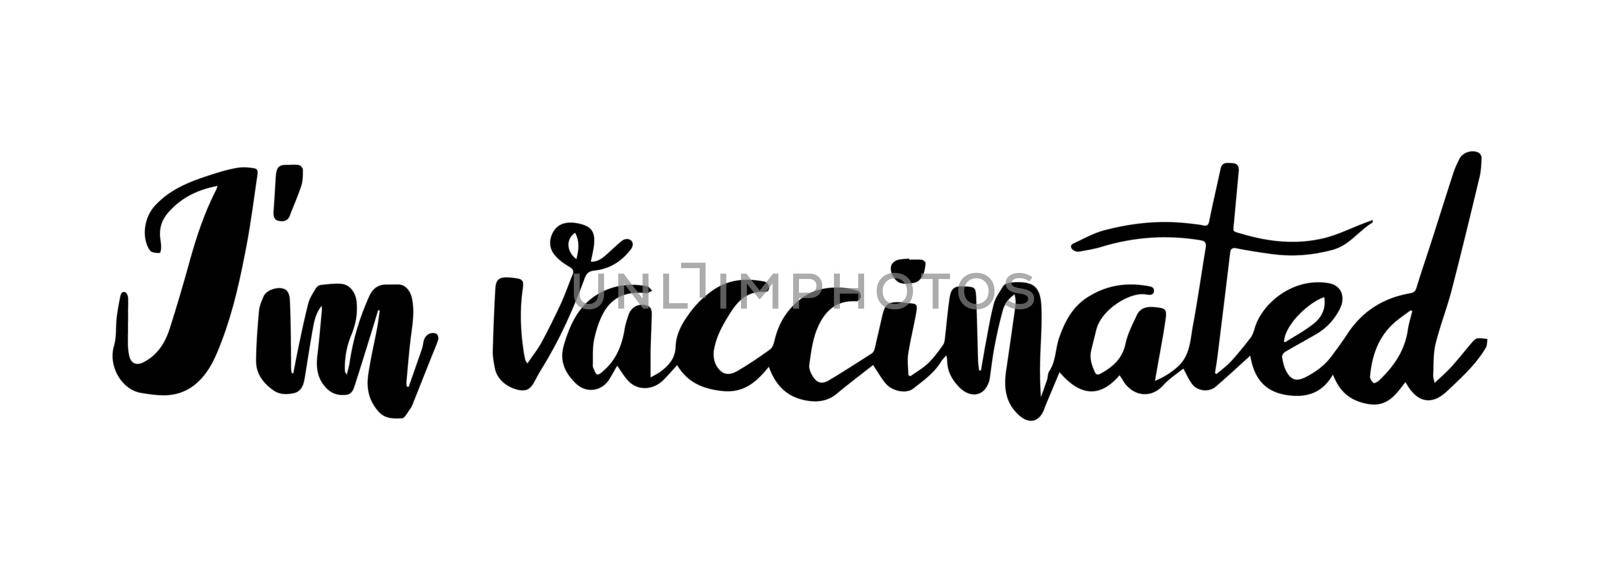 I am vaccinated hand written lettering. Funny masn design. Corona virus vaccine concept. Vector illustration